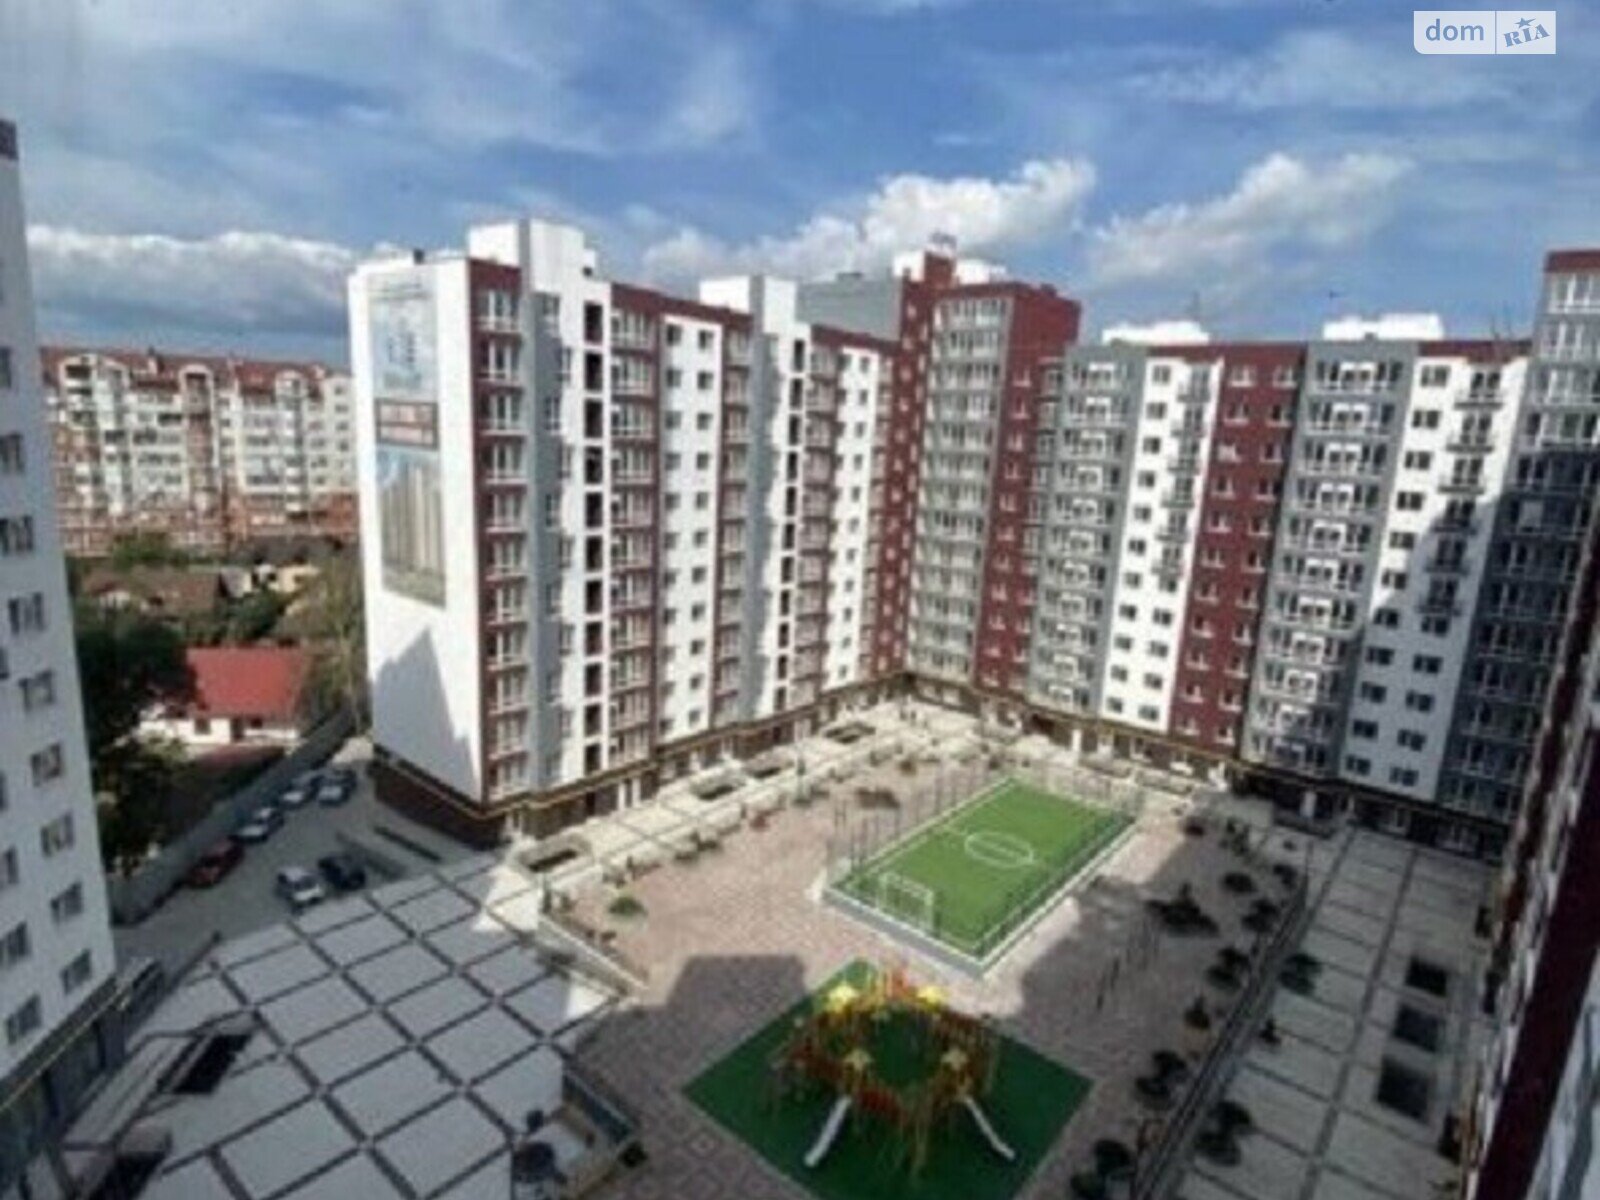 Продажа двухкомнатной квартиры в Ивано-Франковске, на ул. Княгинин, район Центр фото 1